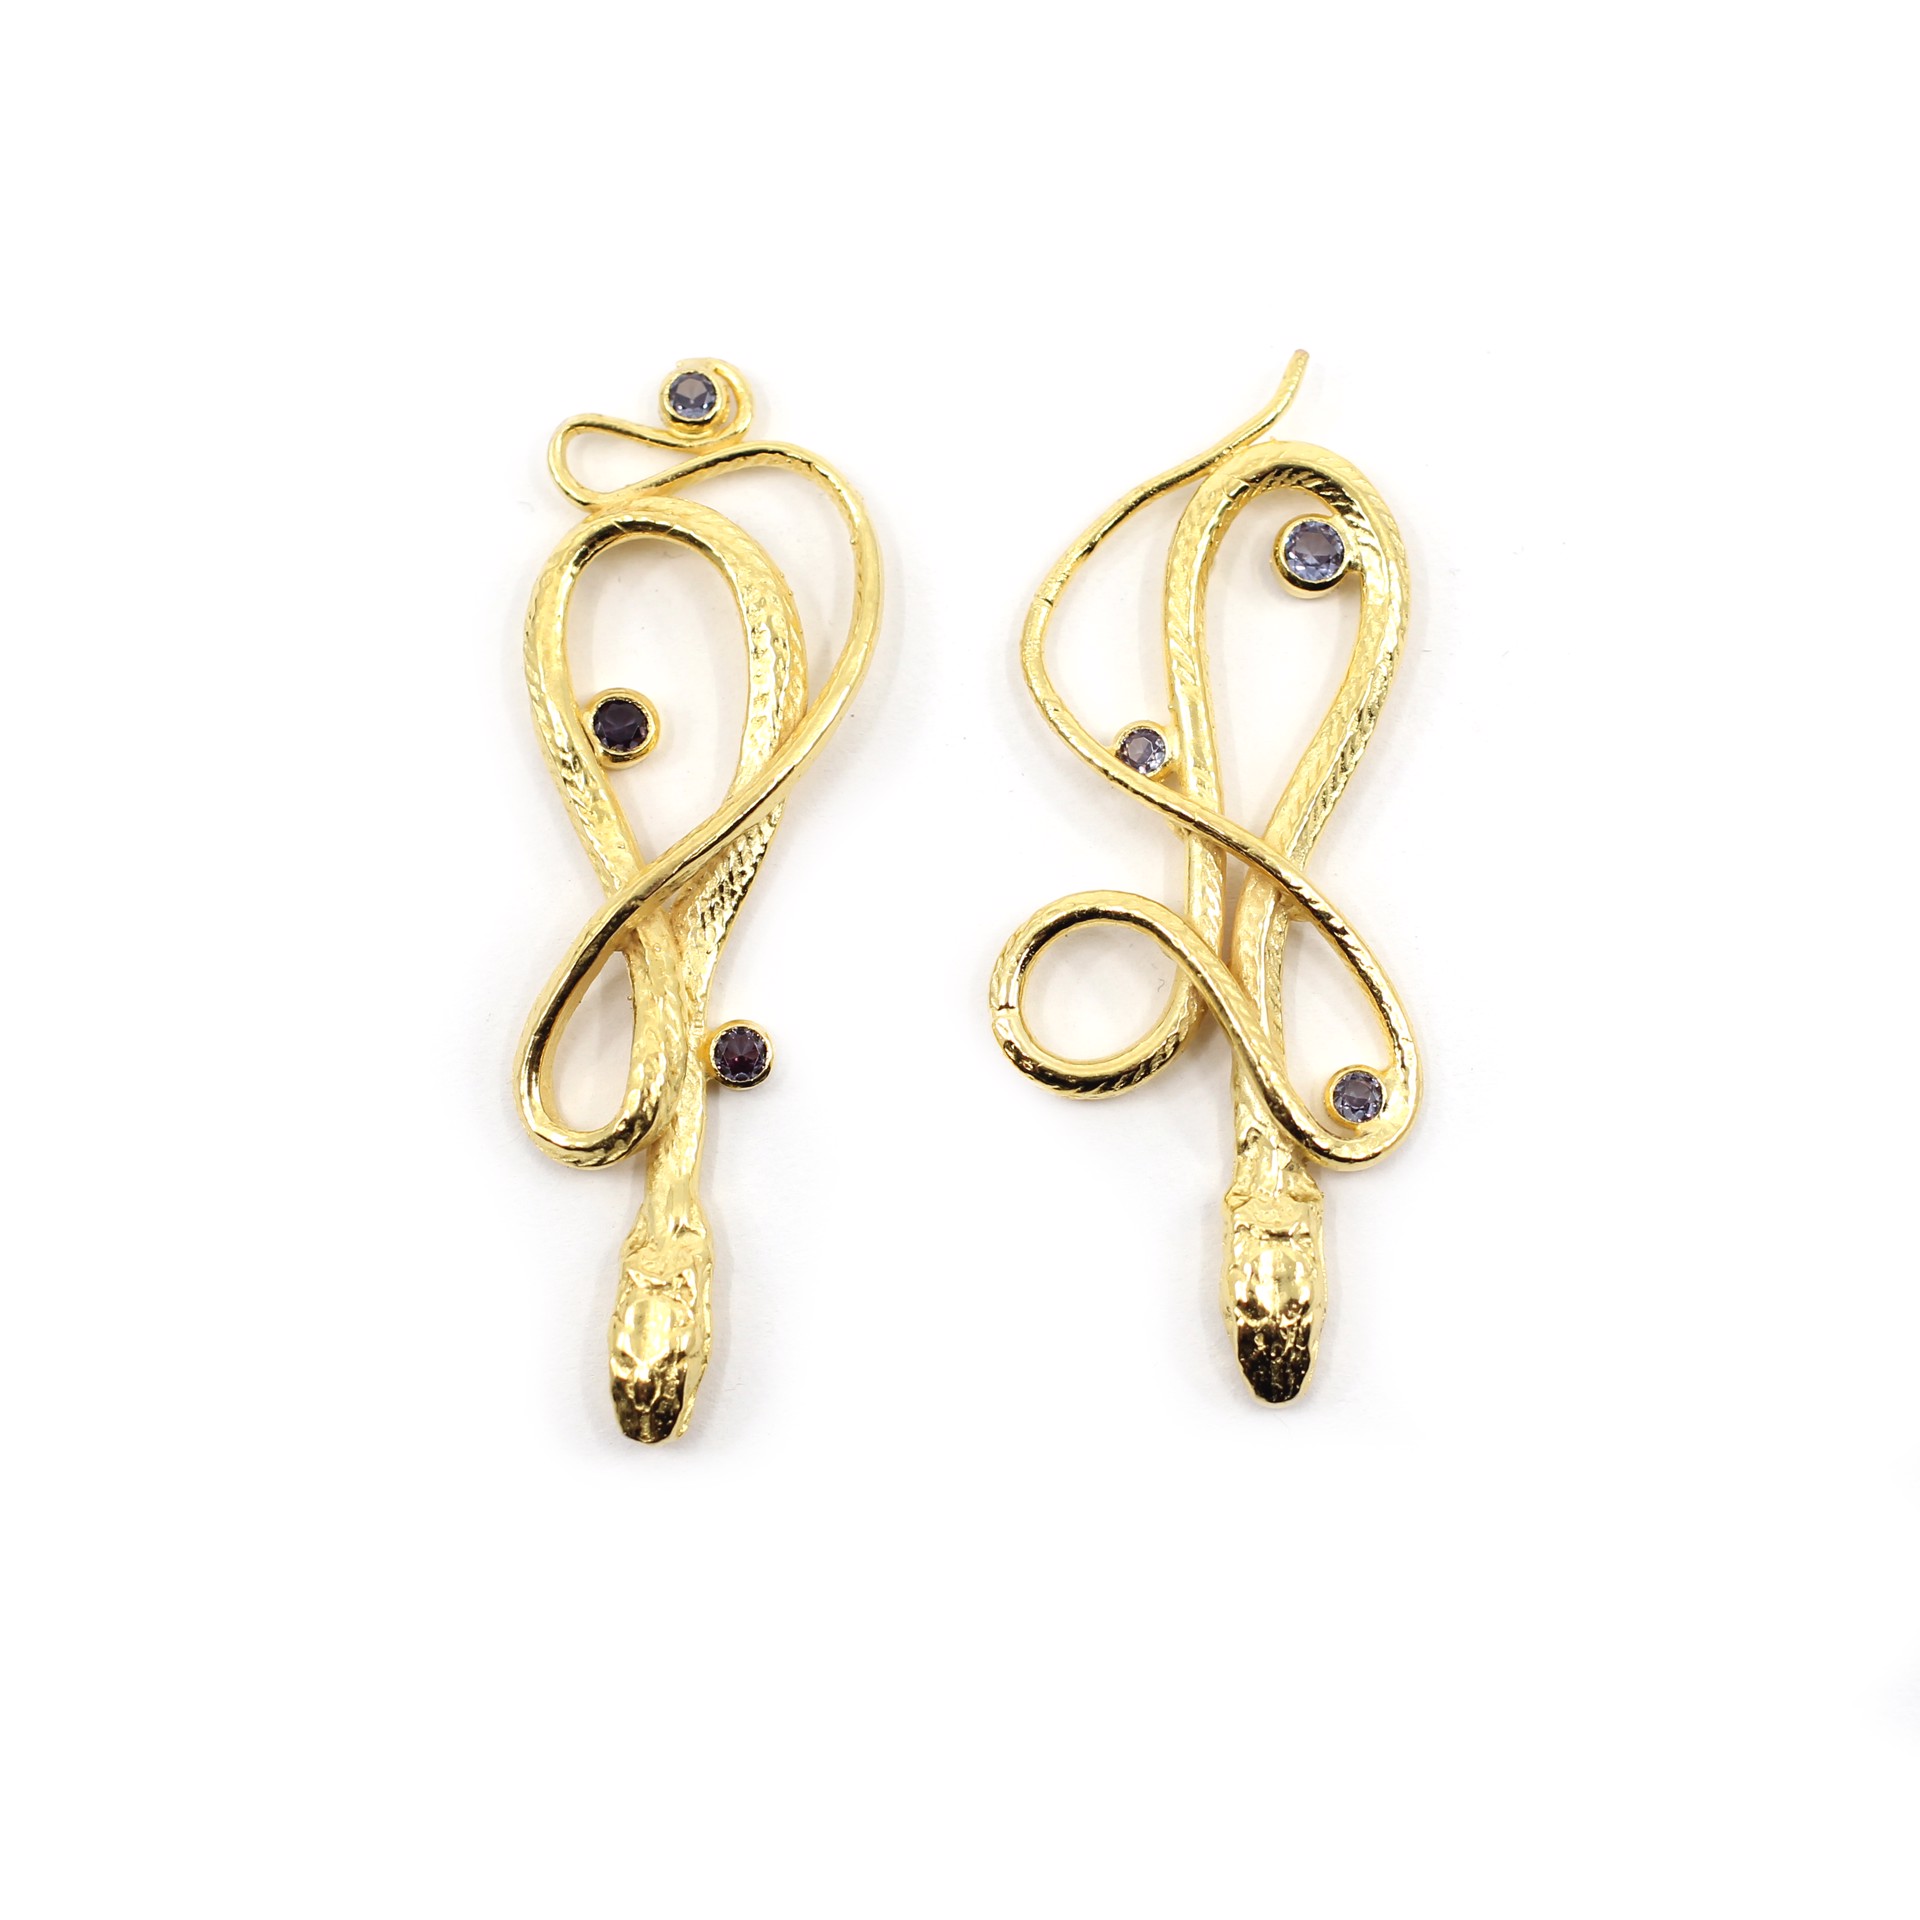 Medium Gold Gemstone Serpentine Earrings by Anna Johnson